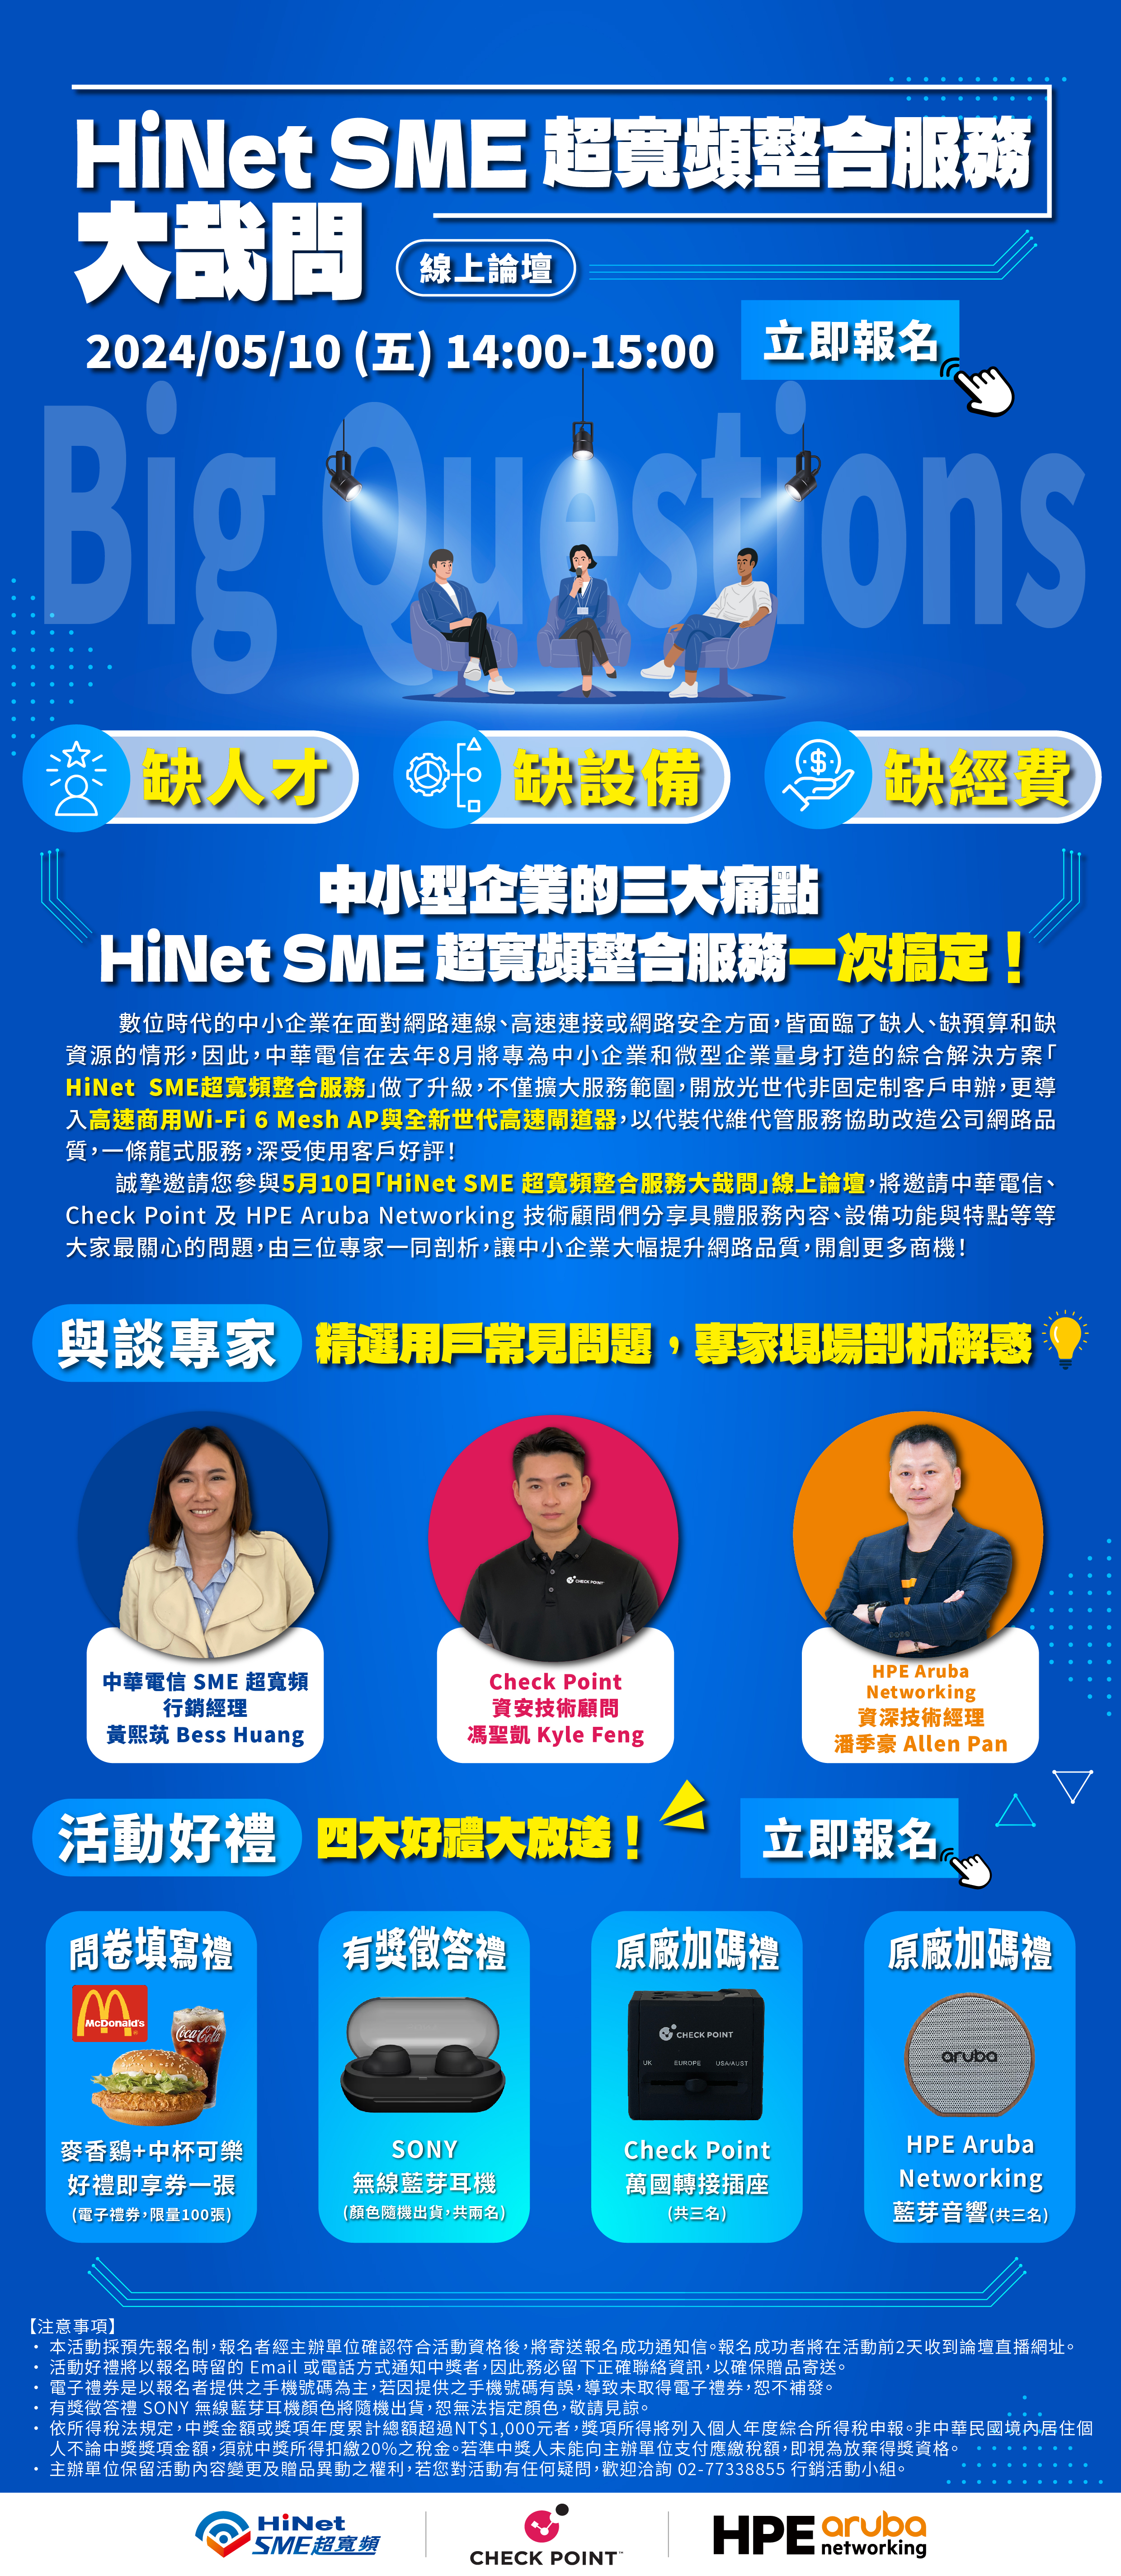 HiNet SME 超寬頻整合服務 edm 0415